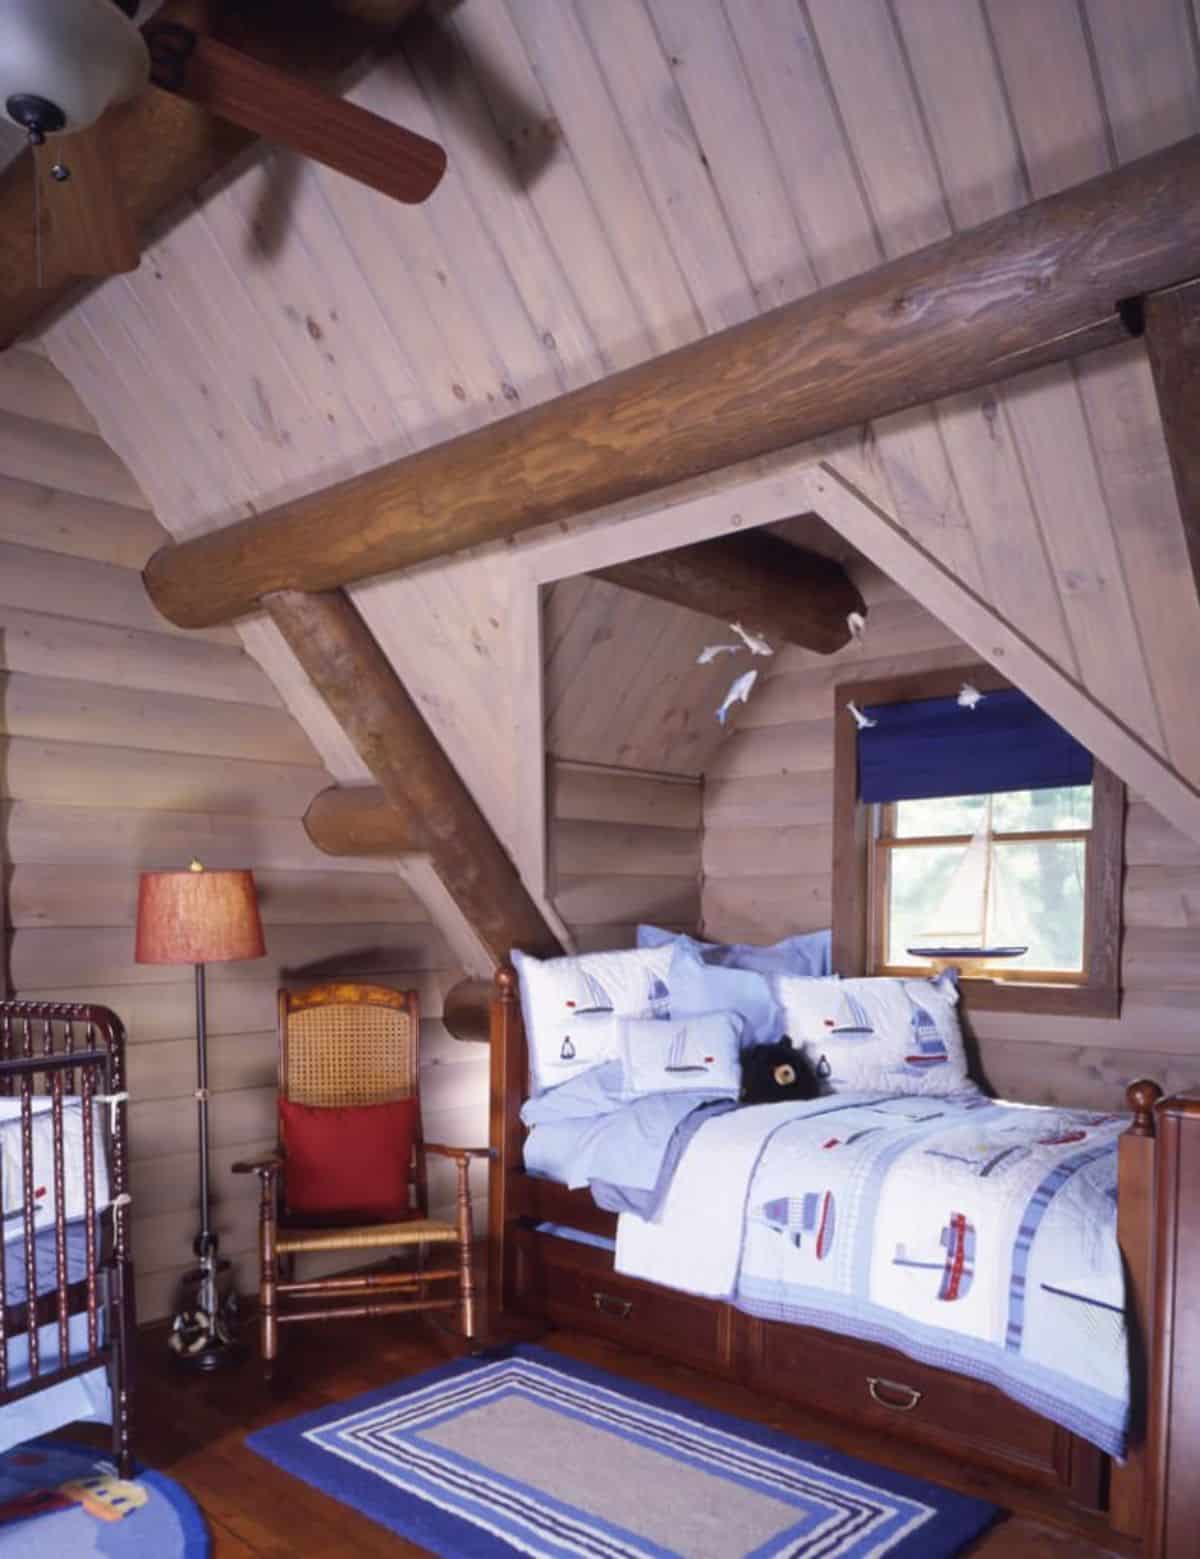 twin bed under dormer window with whtie bedding